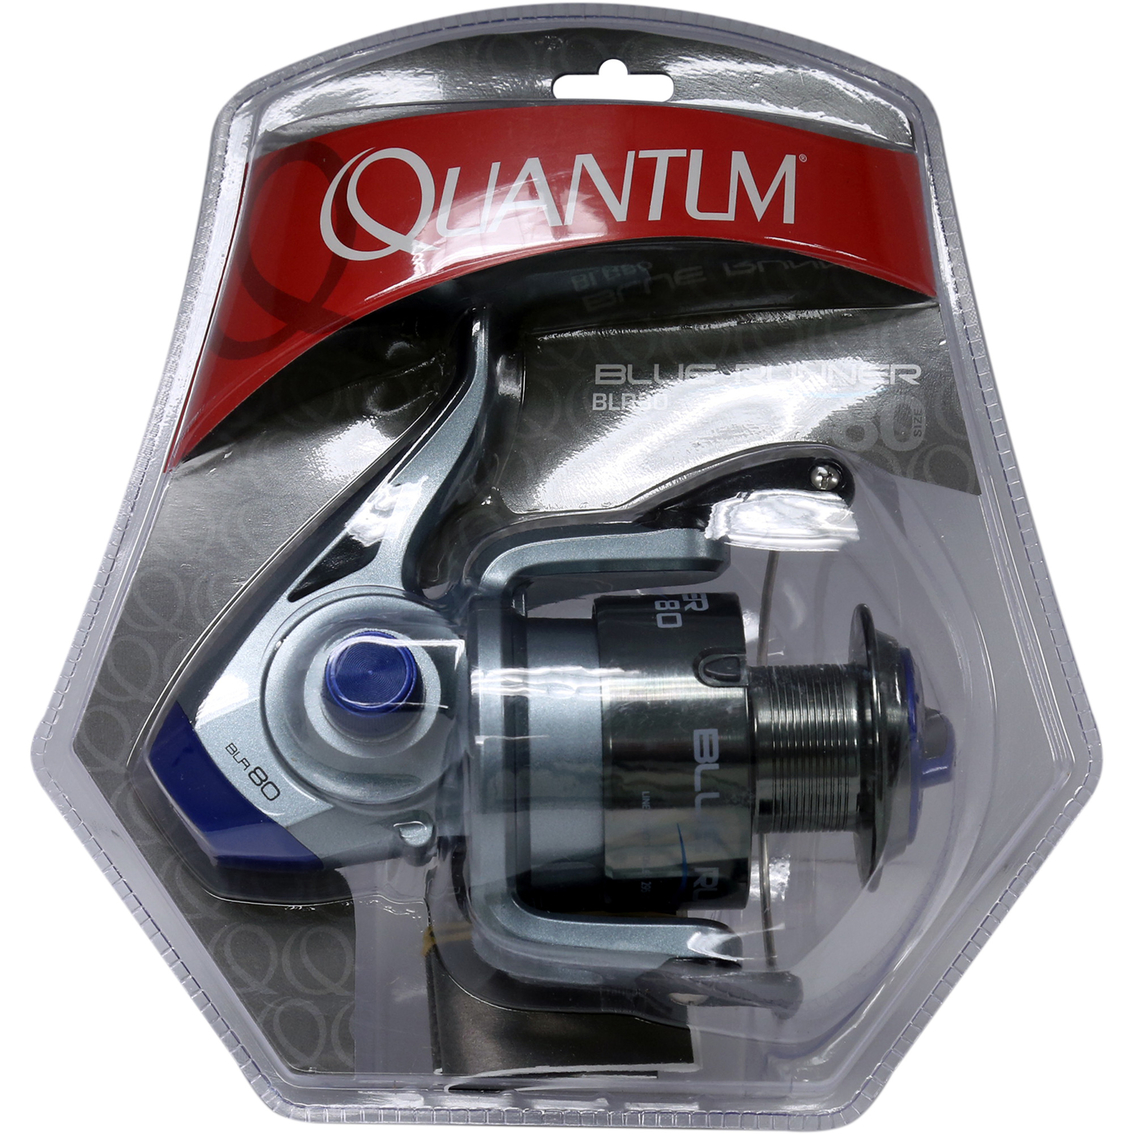 Quantum Blue Runner 40 Spinning Reel, Saltwater Rods & Reels, Sports &  Outdoors